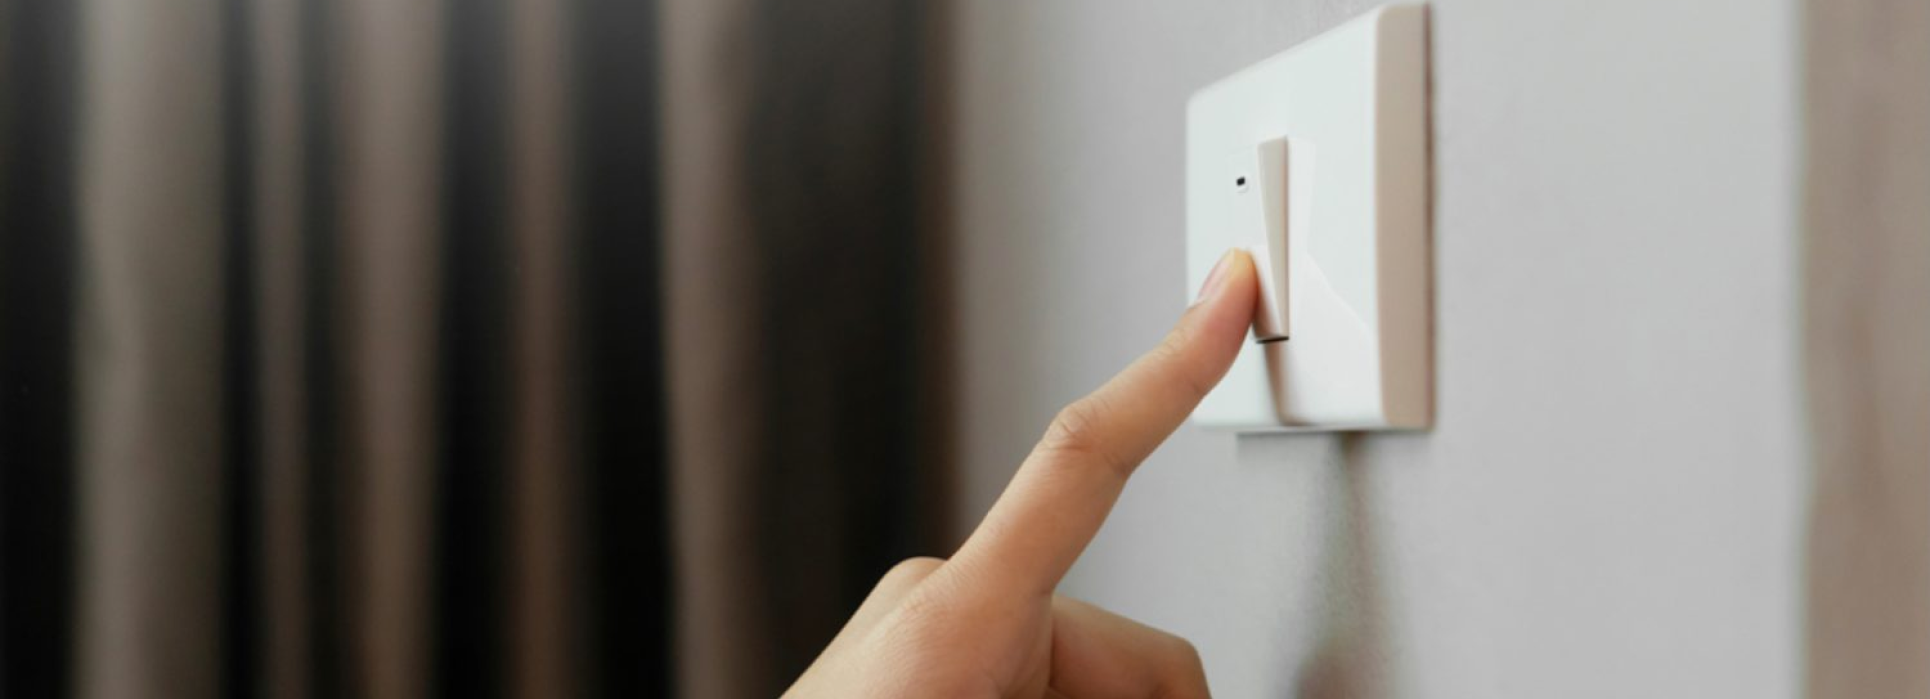 Best HomeKit Light Switch - Evvr In-Wall Relay Switch